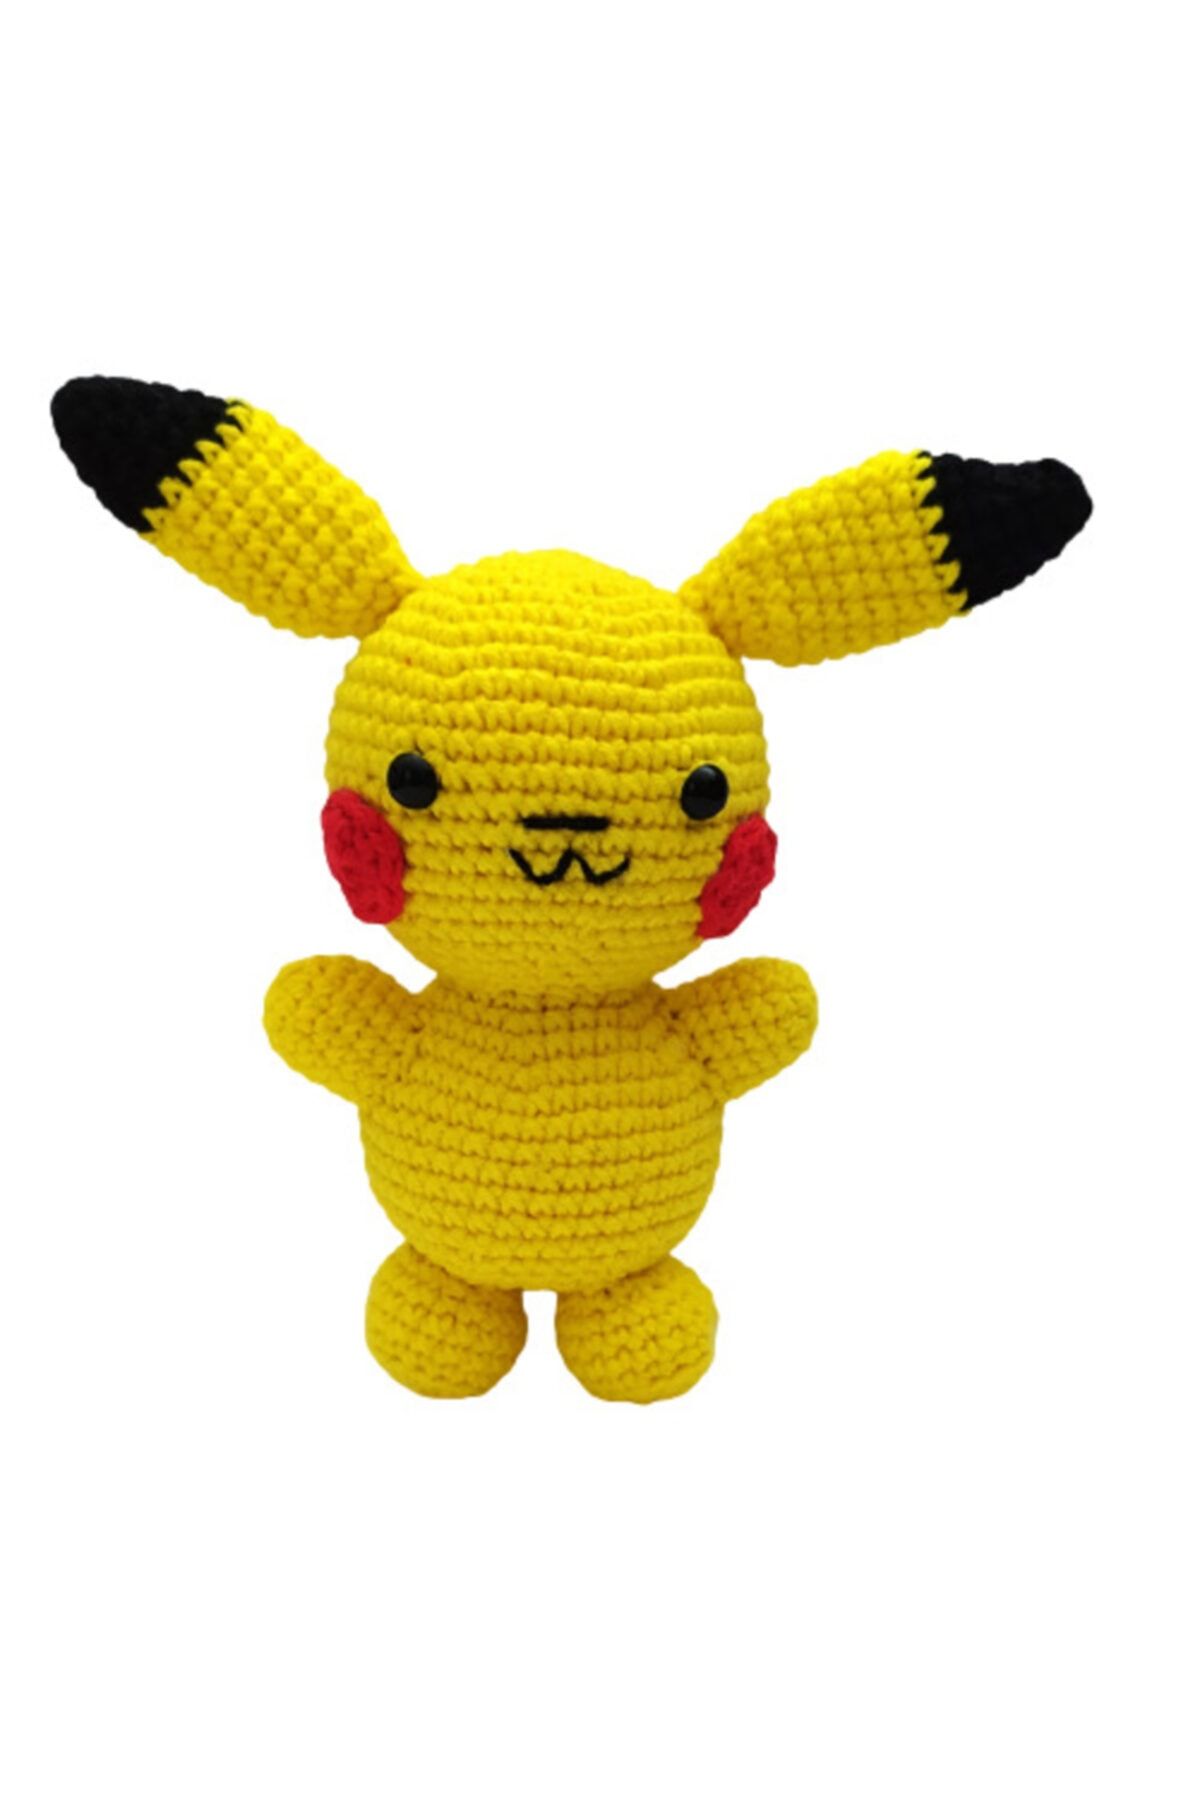 OYUNCAKPARK Pikachu Amigurumi Organik Oyuncak